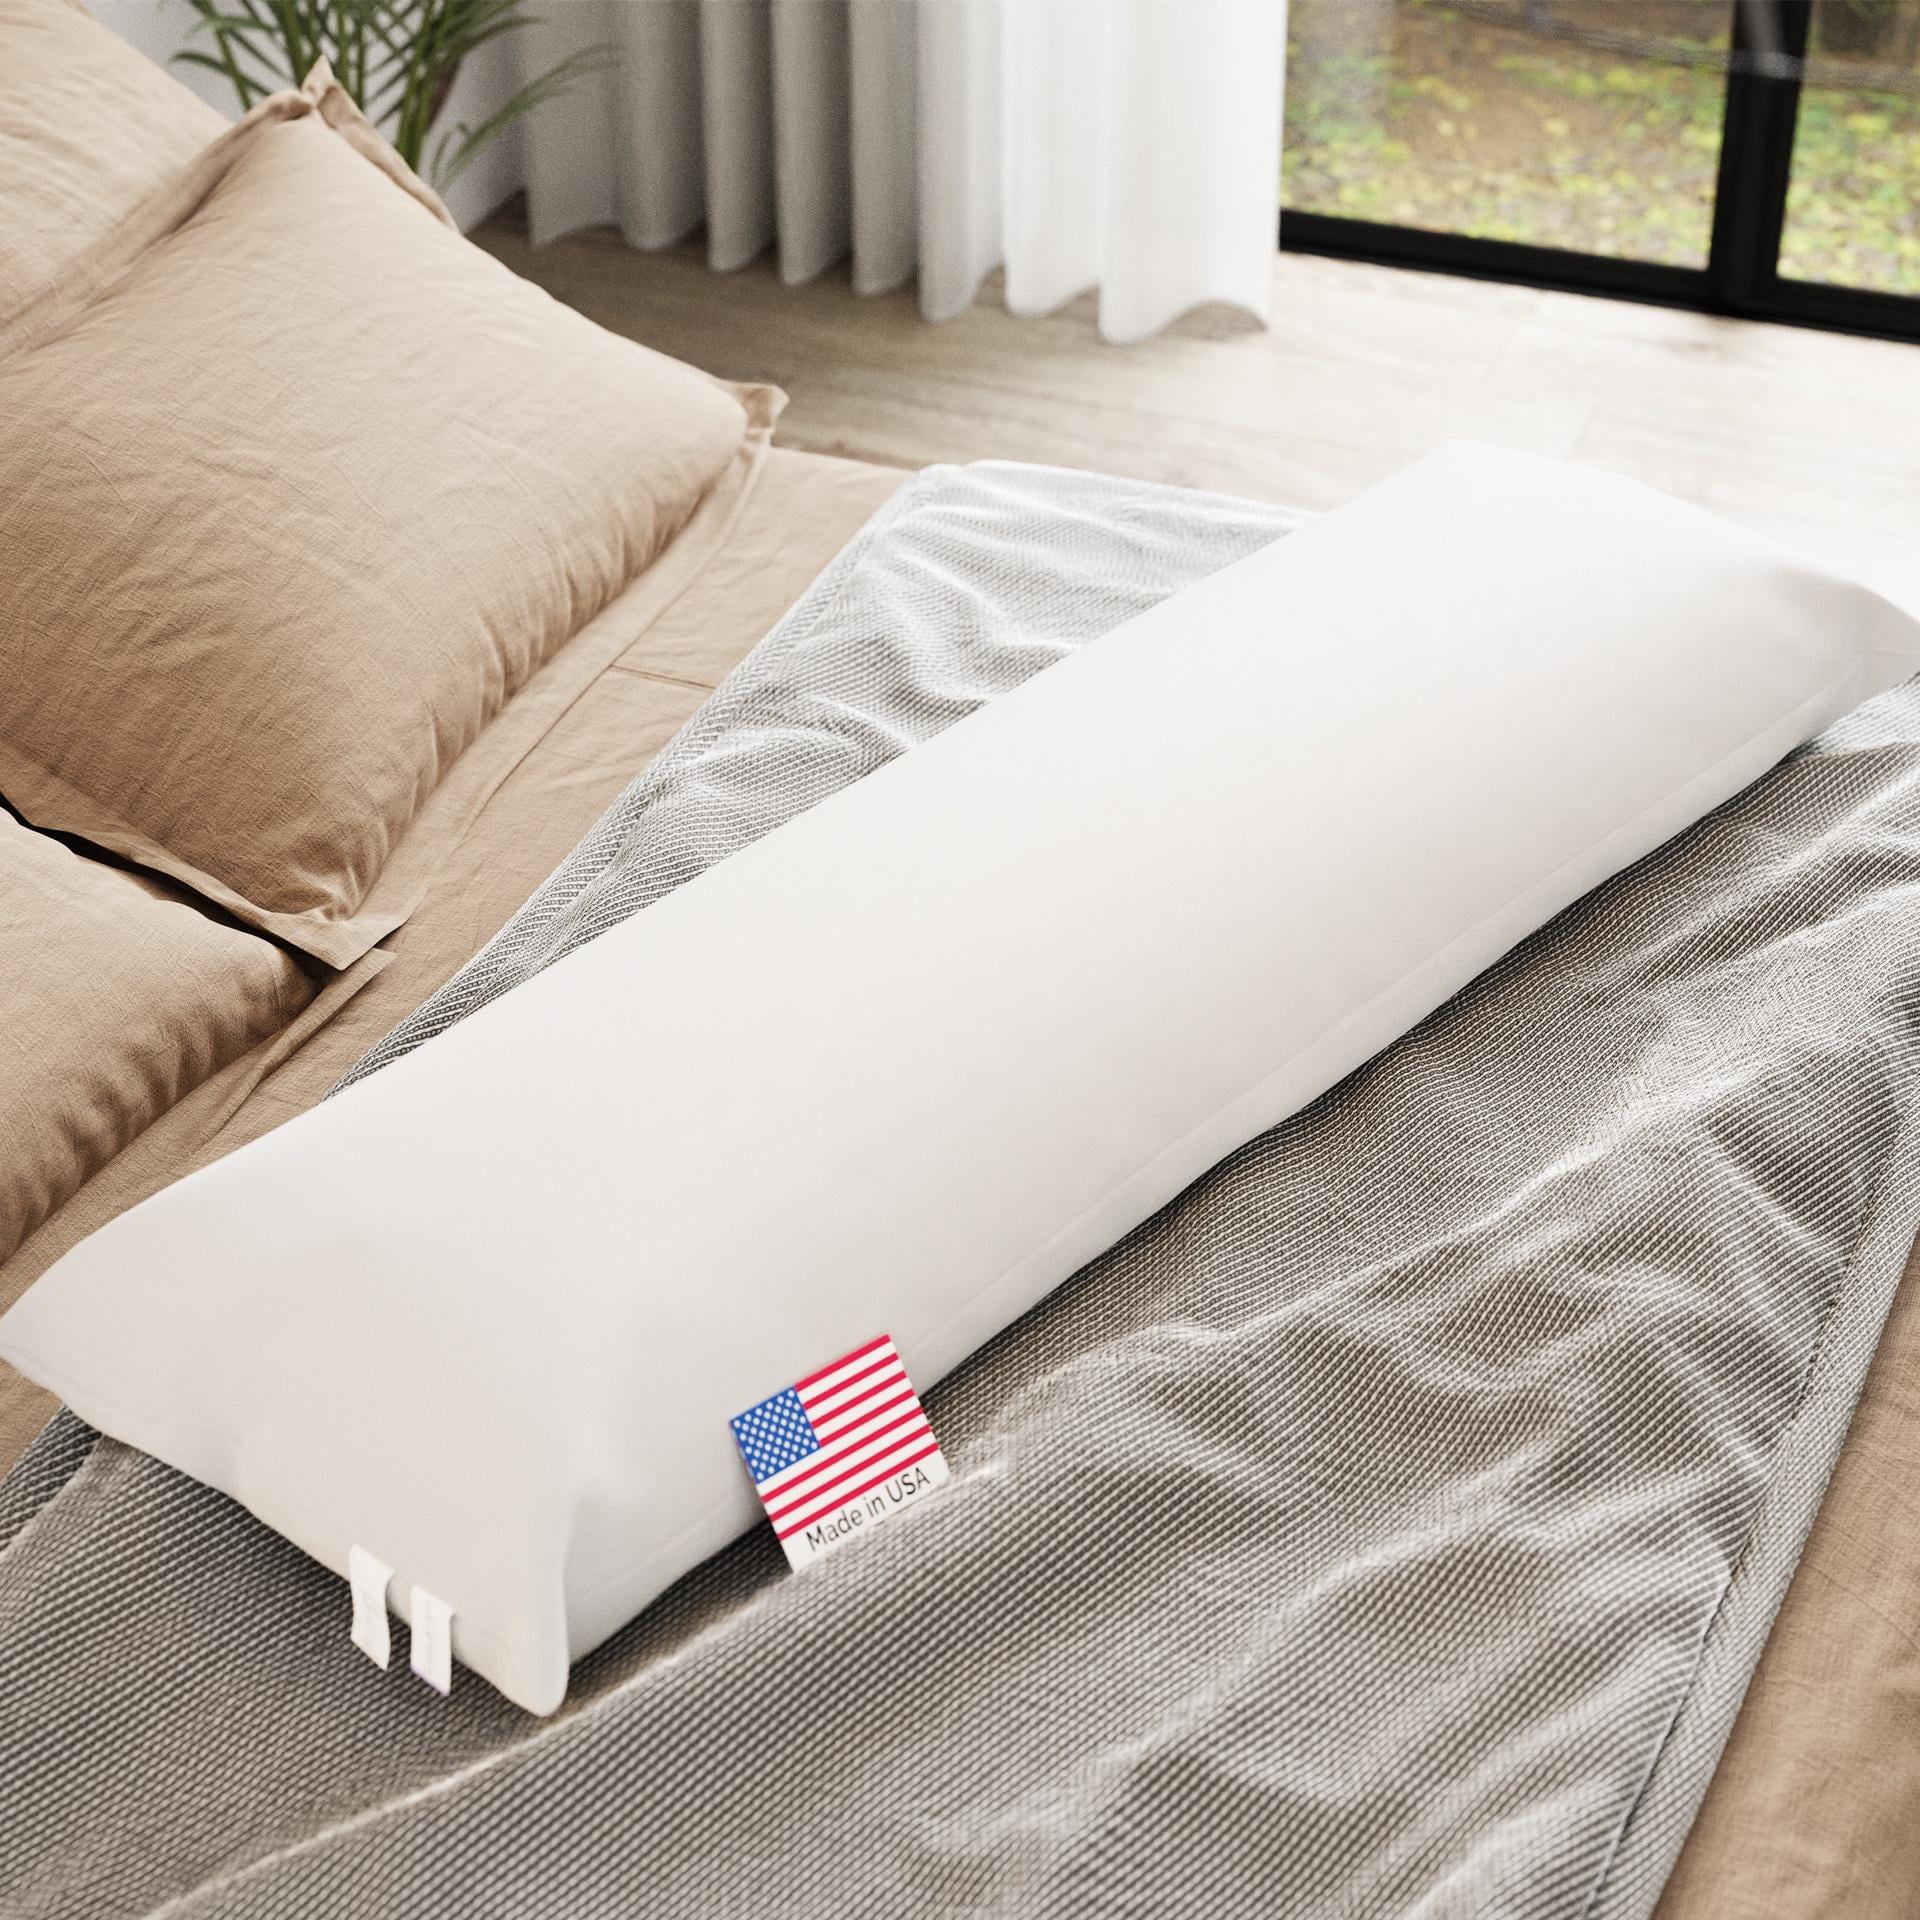 Body Posture Pillow (Fibre Filled) - White Cotton Cover, 20x60